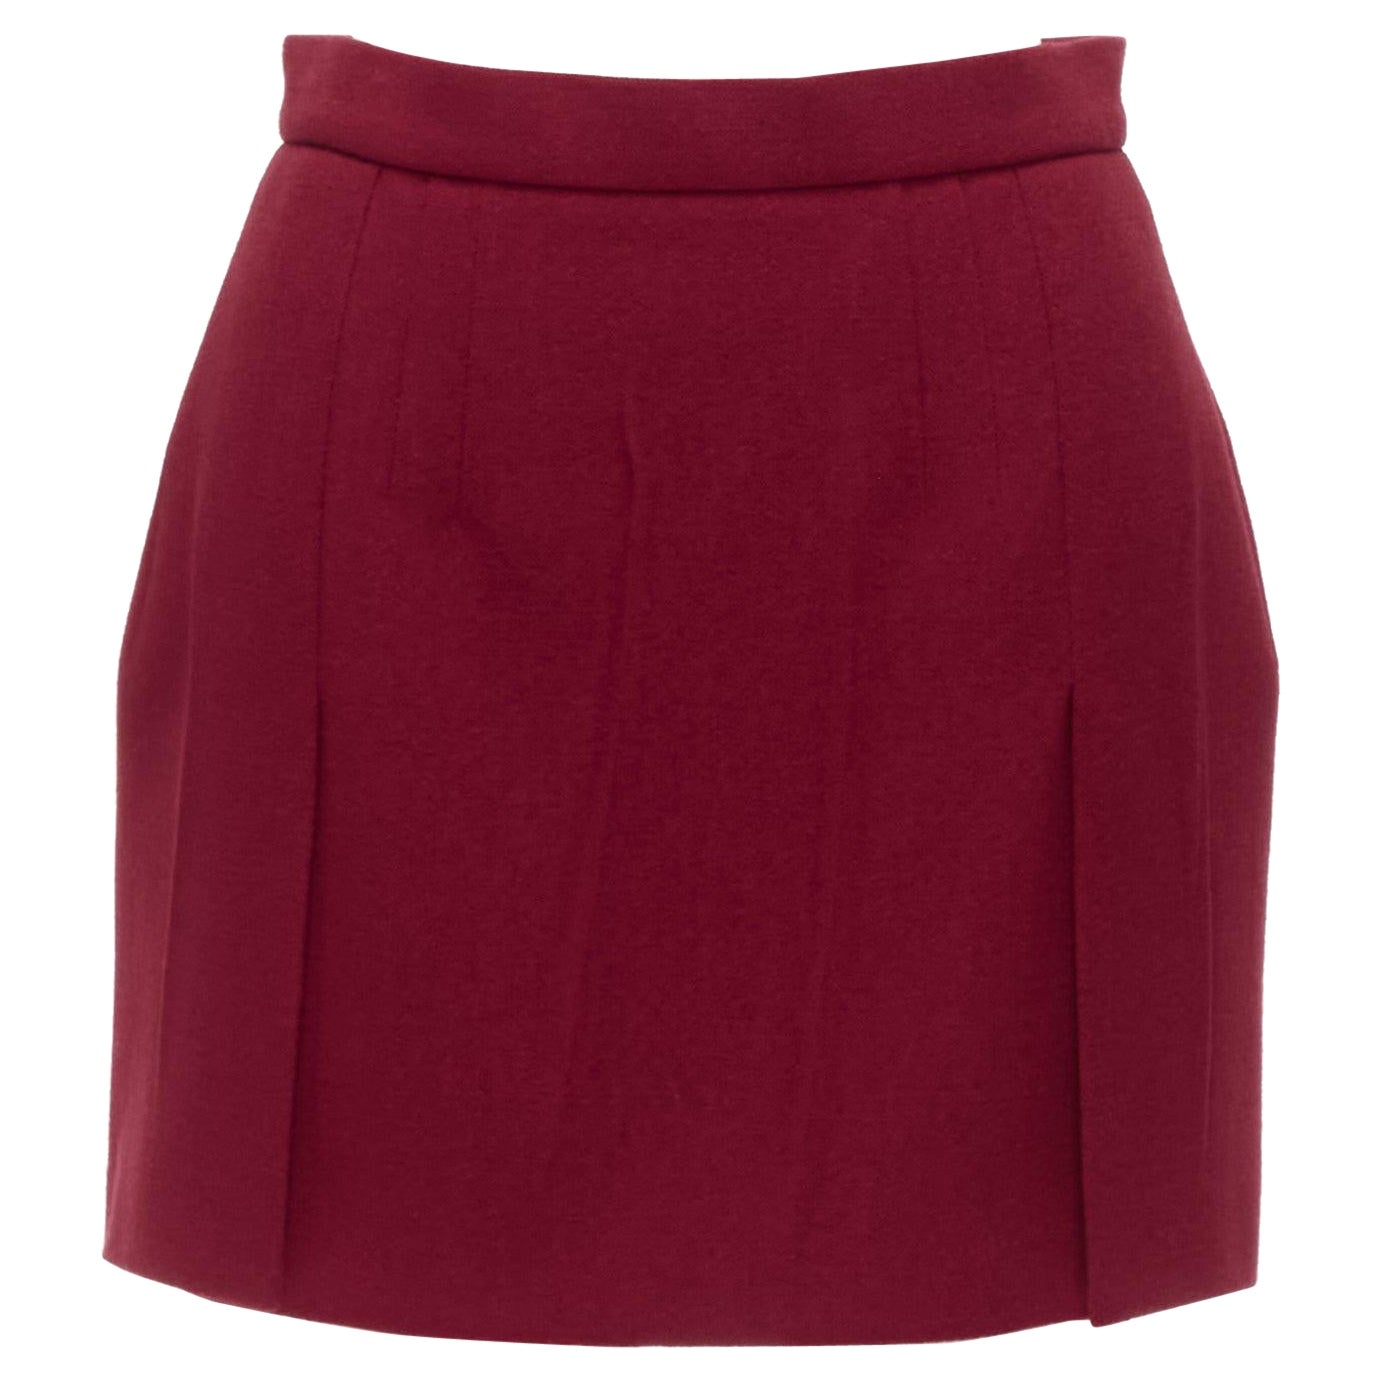 PRADA 2009 crimson red virgin wool blend crinkle effect crepe mini skirt IT42 M For Sale